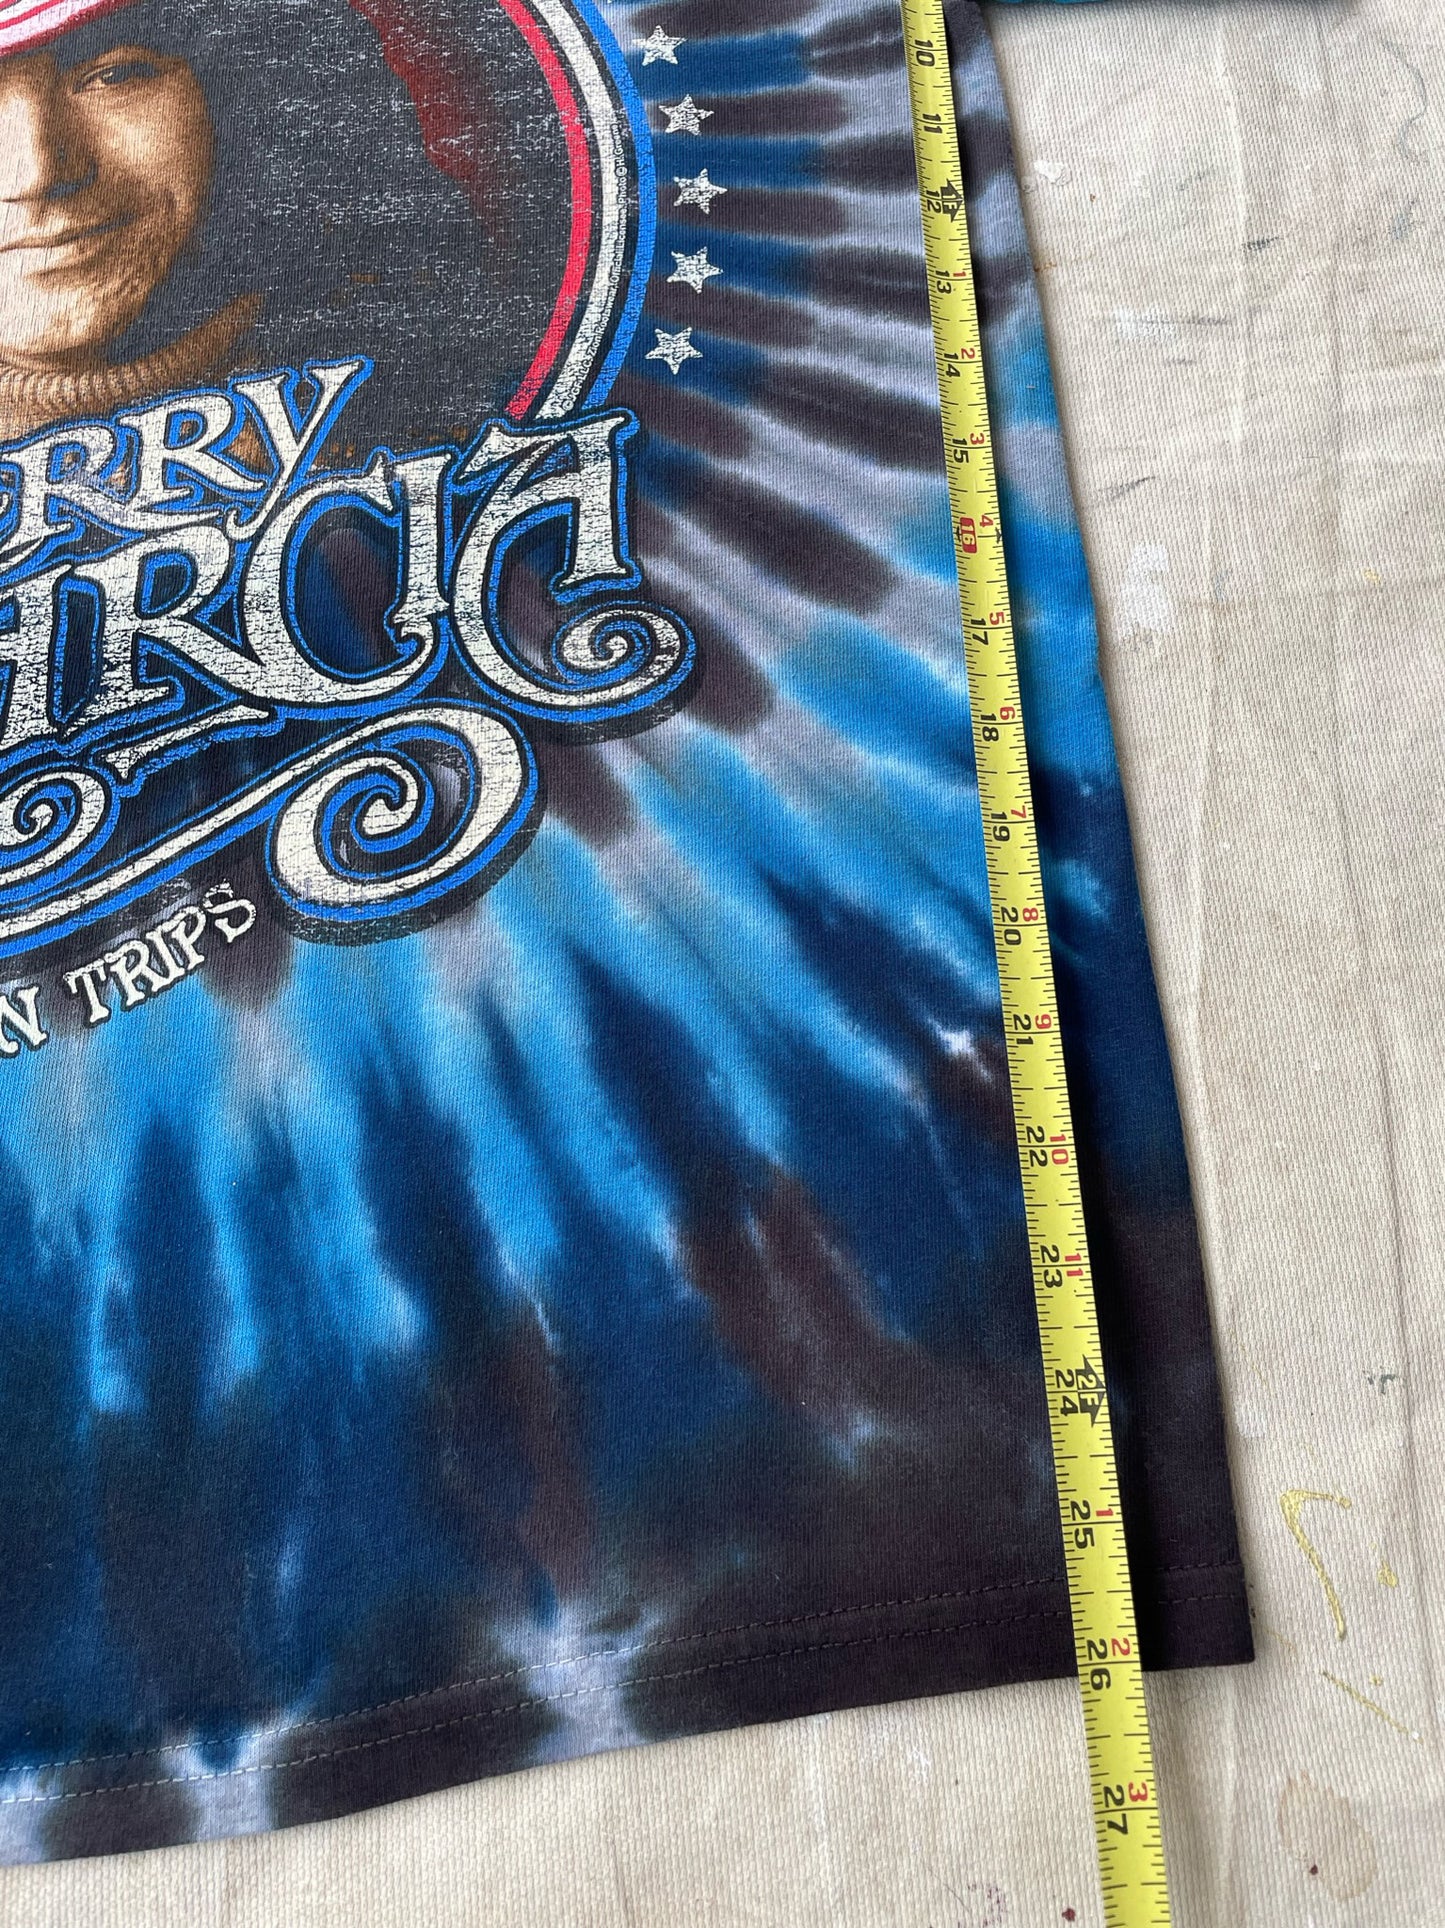 Jerry Garcia Tie Dye T-Shirt—[M]